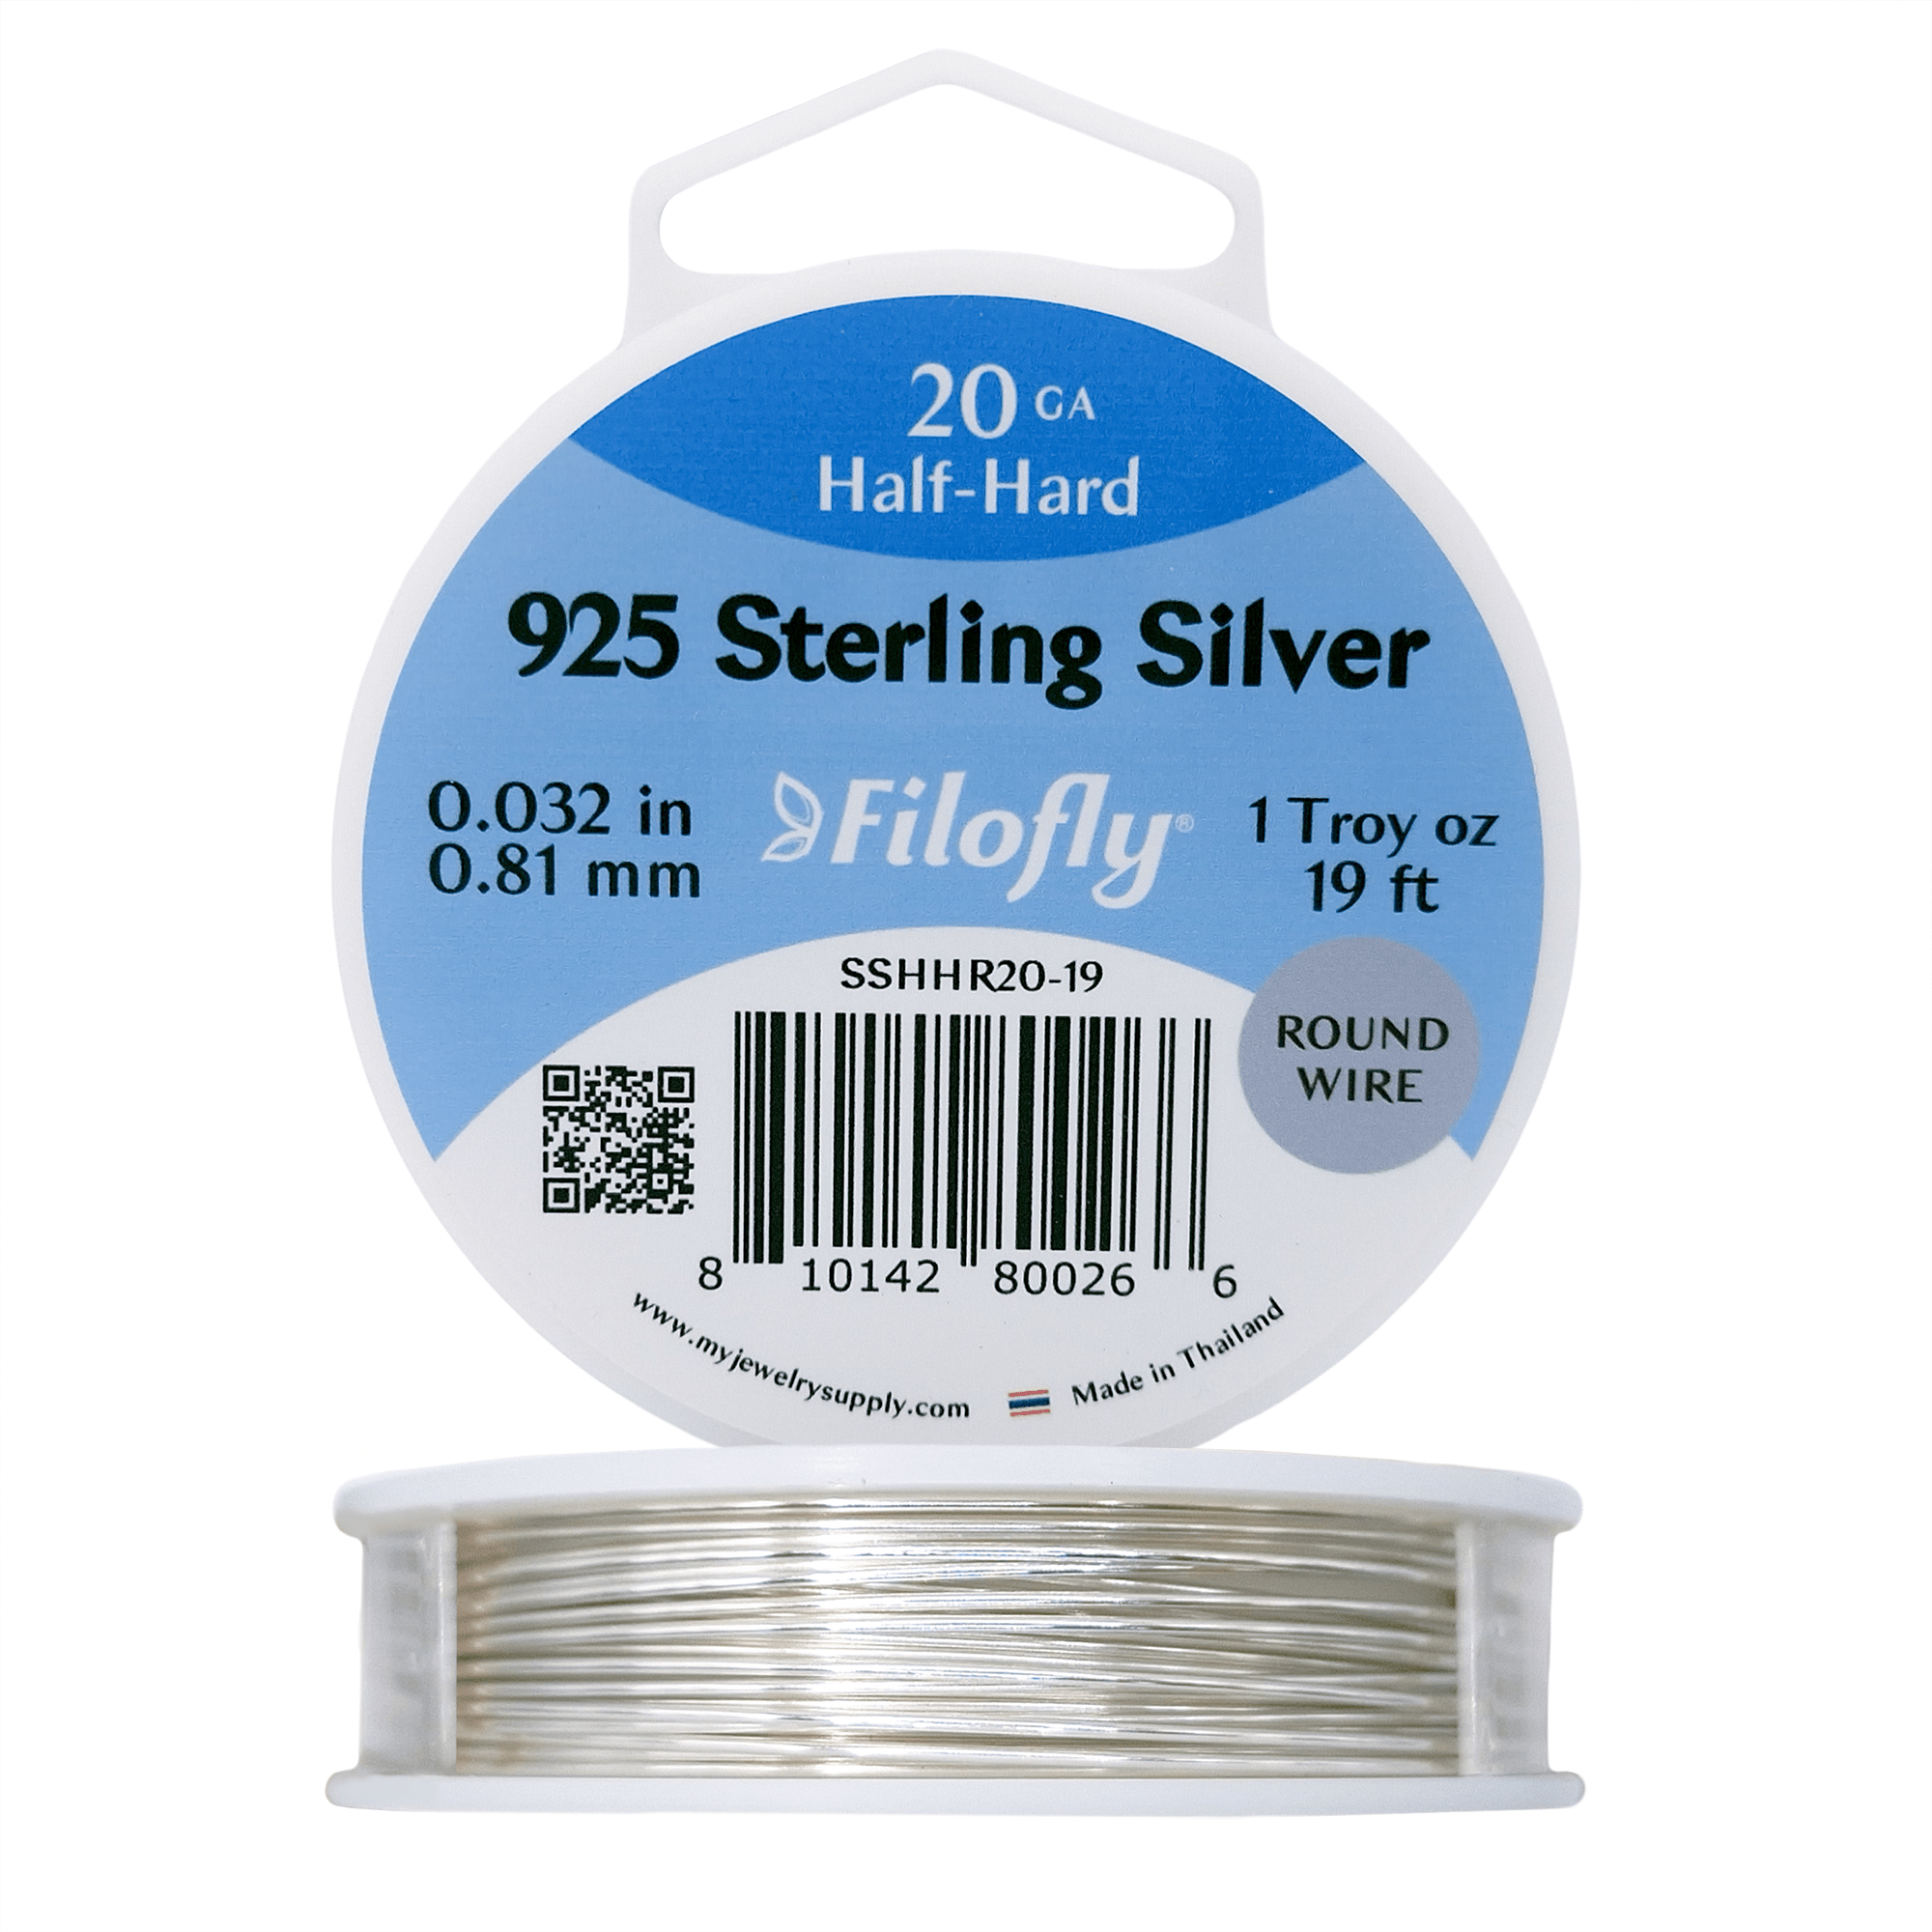 Filofly, 925 Sterling Sliver Wire, Half Hard, Round